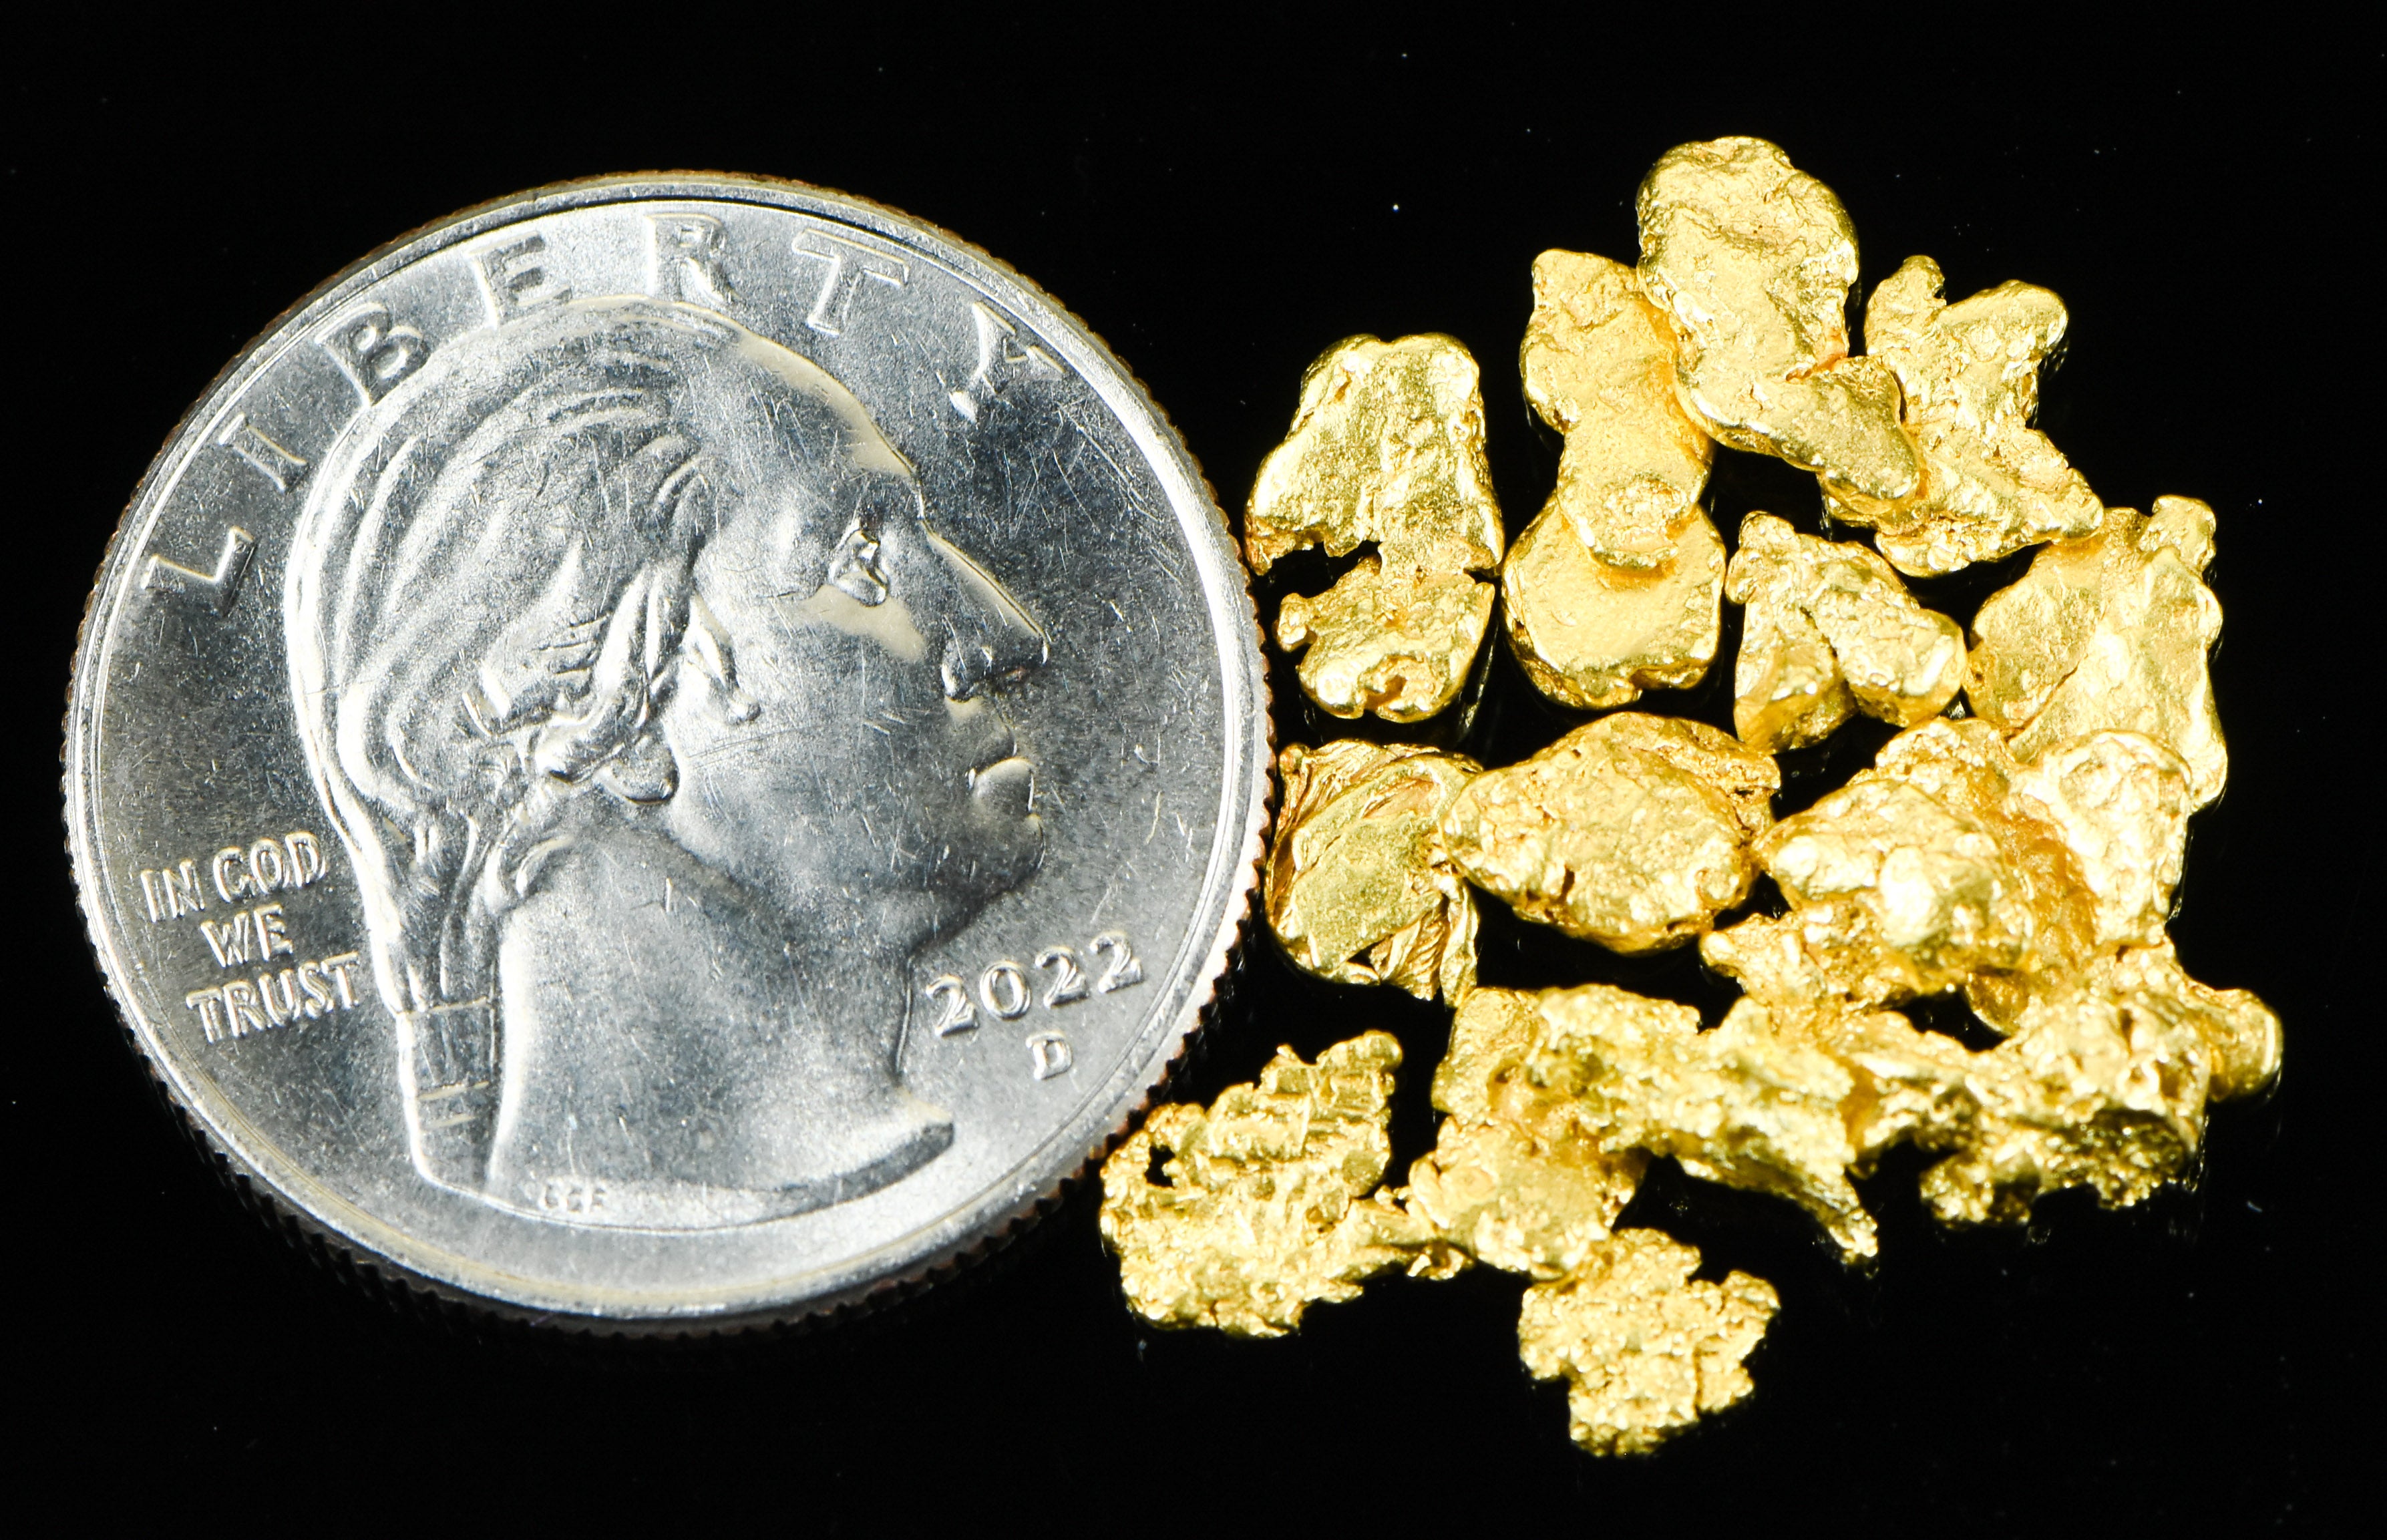 Alaskan Yukon BC Gold Rush Nuggets #6 Mesh 5 GRAMS OF CLEAN GOLD FLAKES.